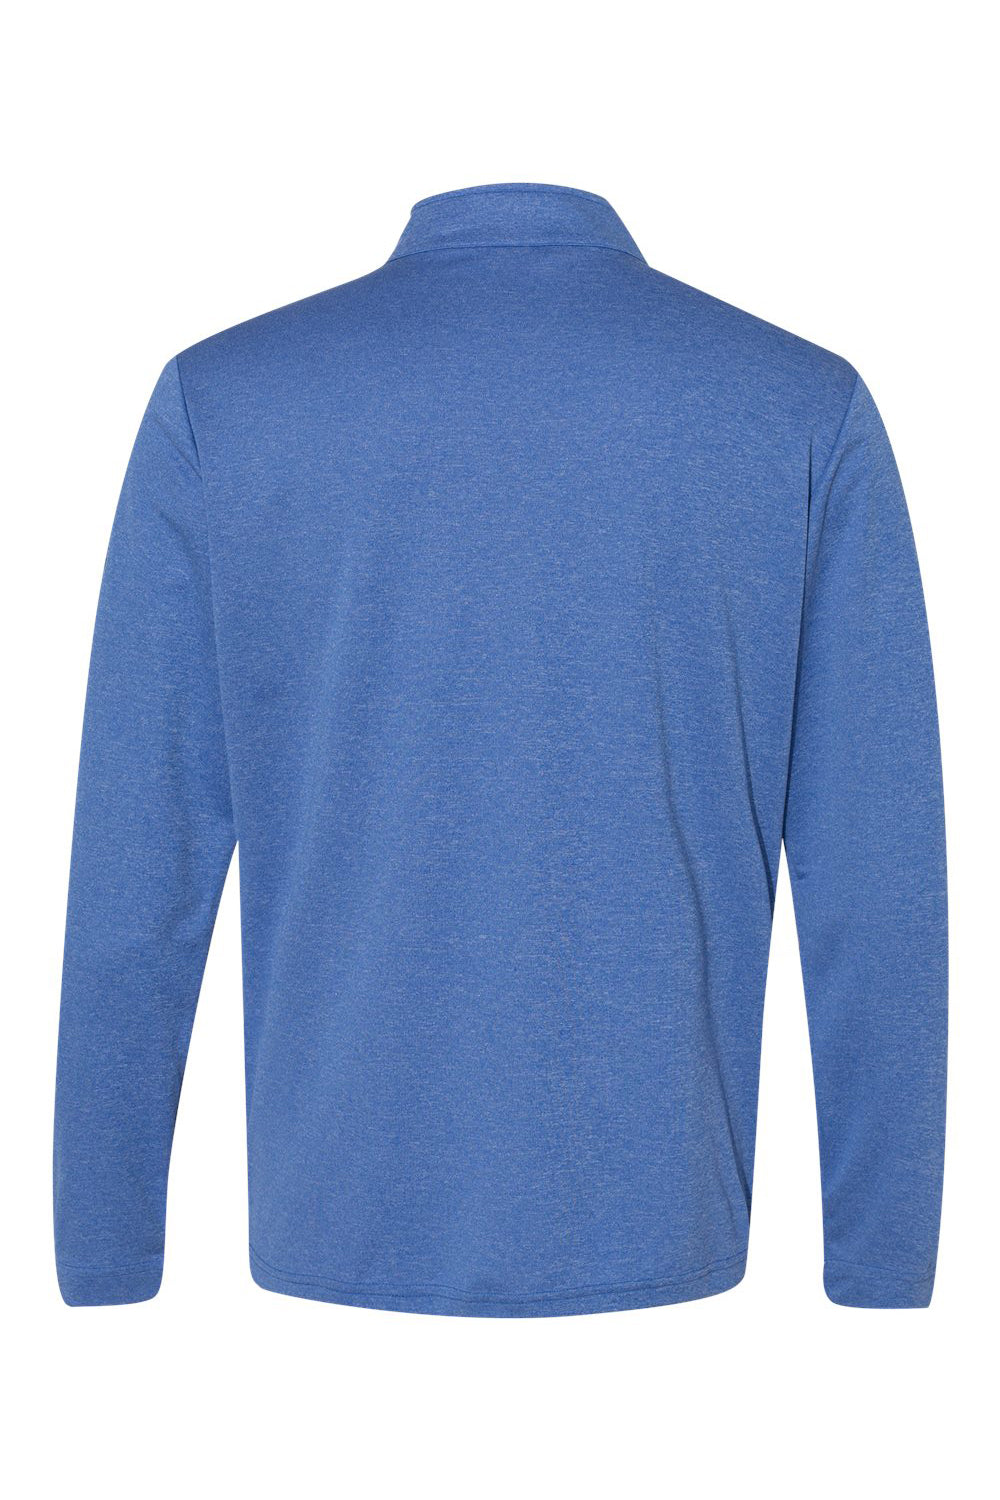 Adidas A280 Mens UPF 50+ 1/4 Zip Sweatshirt Heather Collegiate Royal Blue/Carbon Grey Flat Back